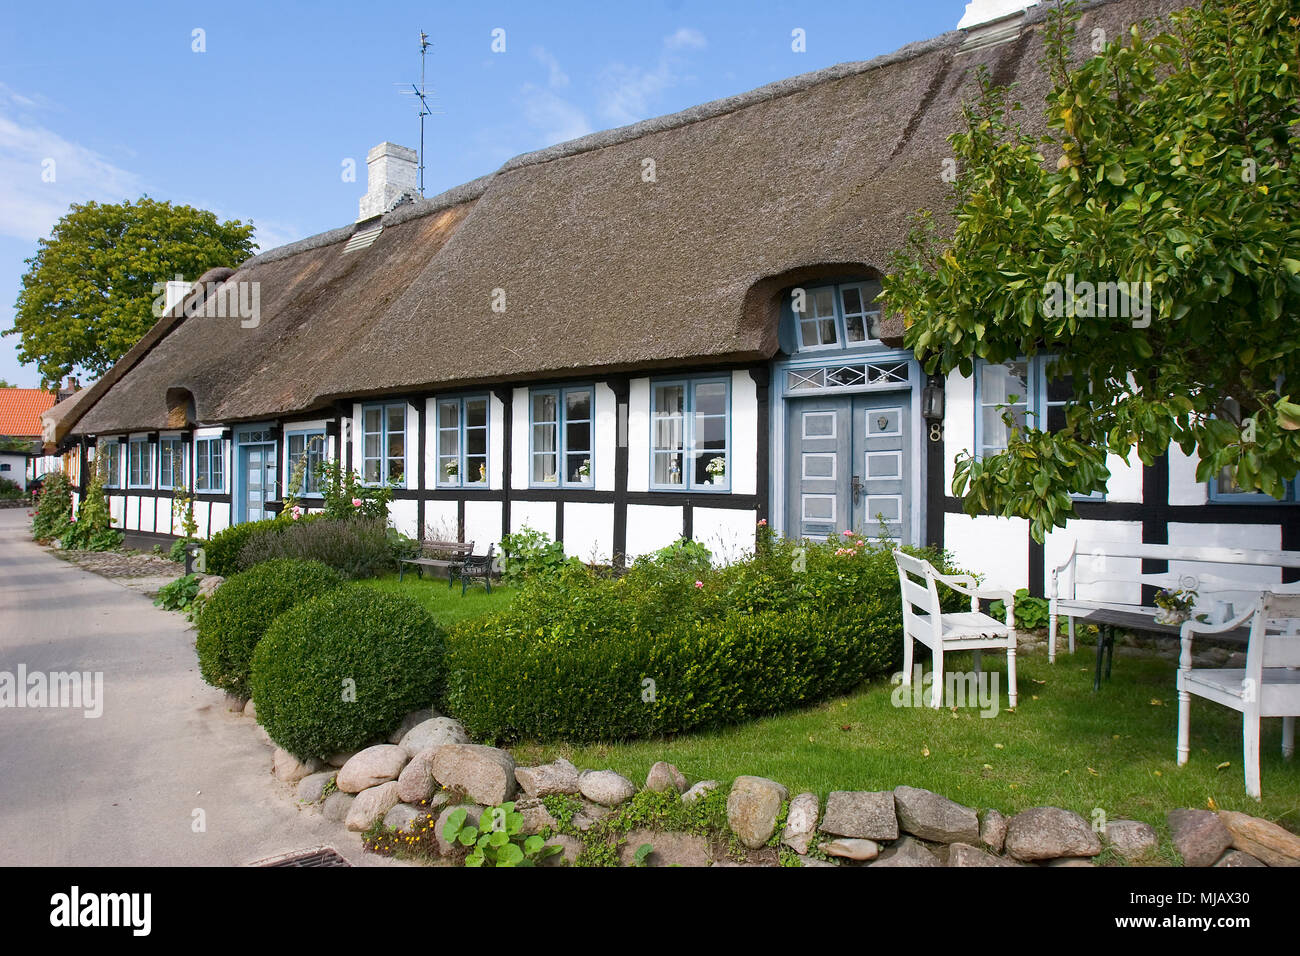 Historische Gebaeude in Nordby, Insel Samsoe, Kattegat, Daenemark Foto Stock